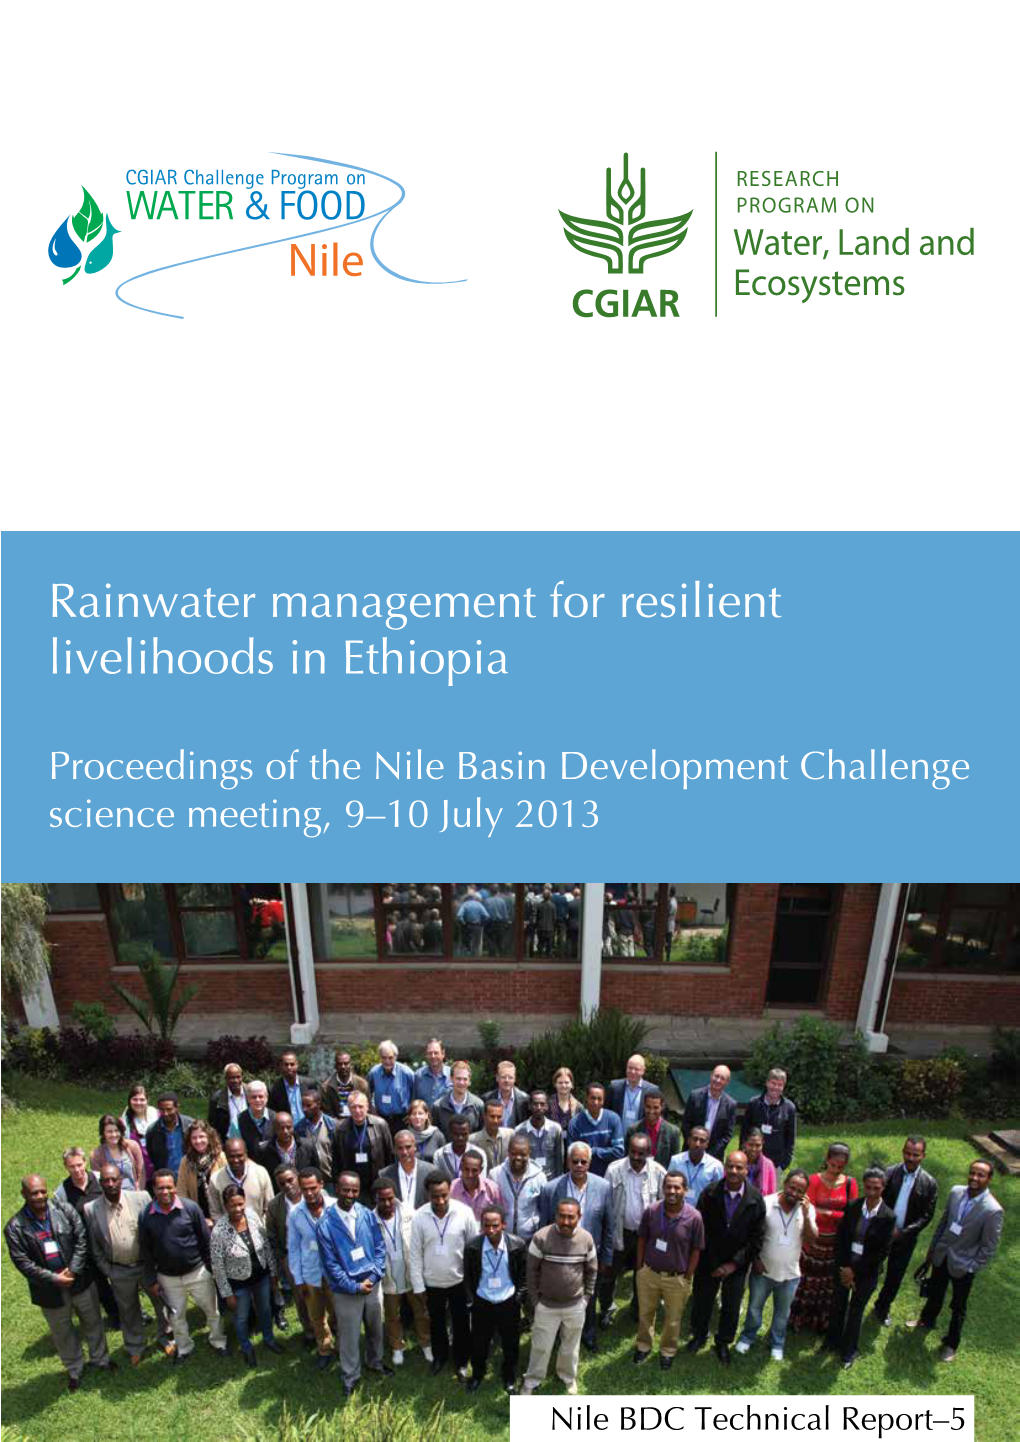 Rainwater Management for Resilient Livelihoods in Ethiopia